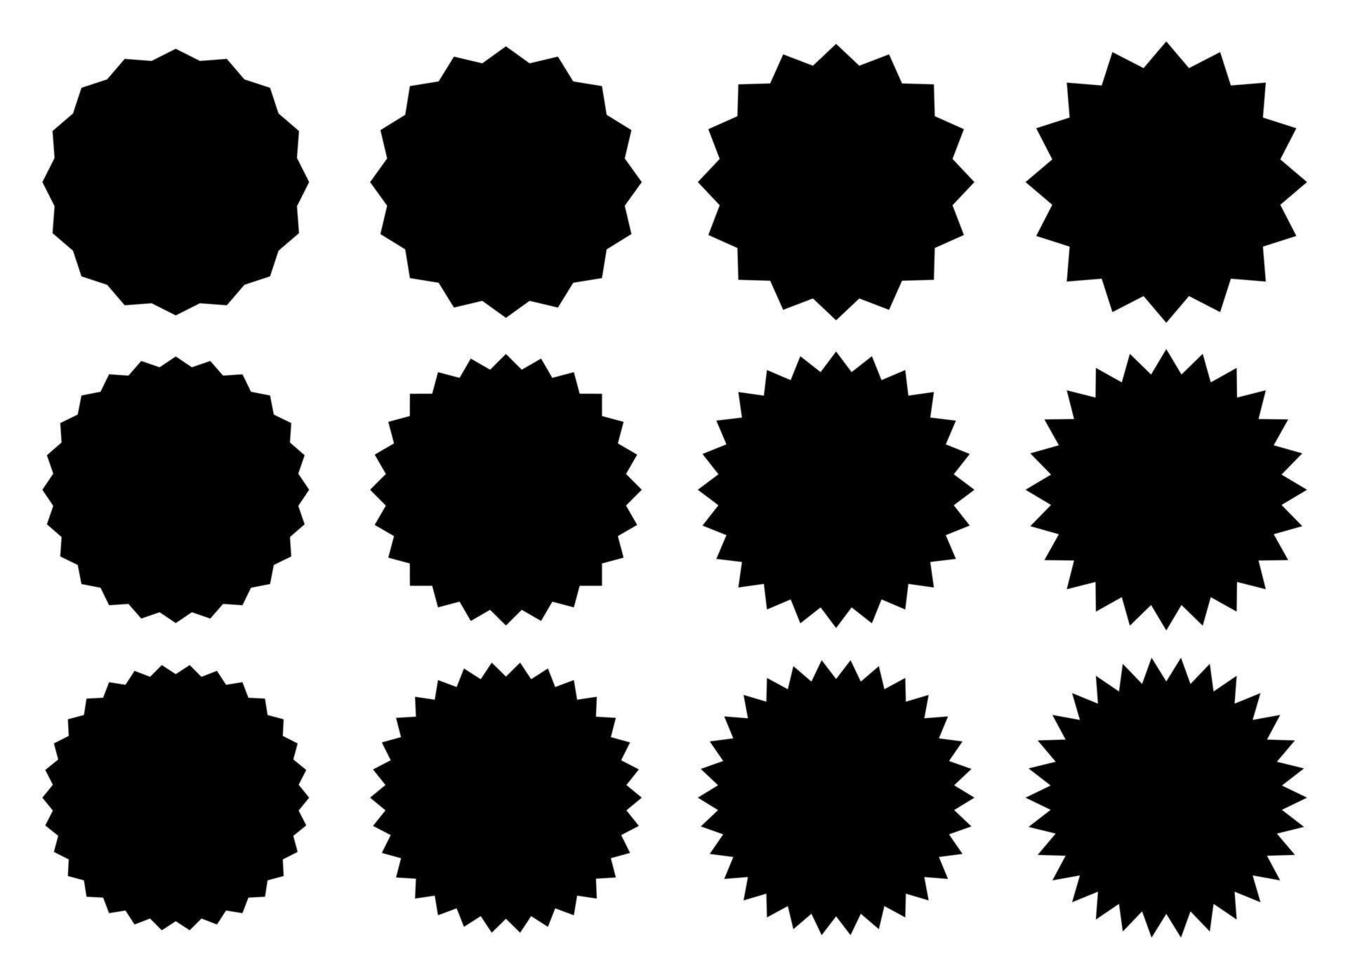 Black simple banner vector design illustration isolated on white background